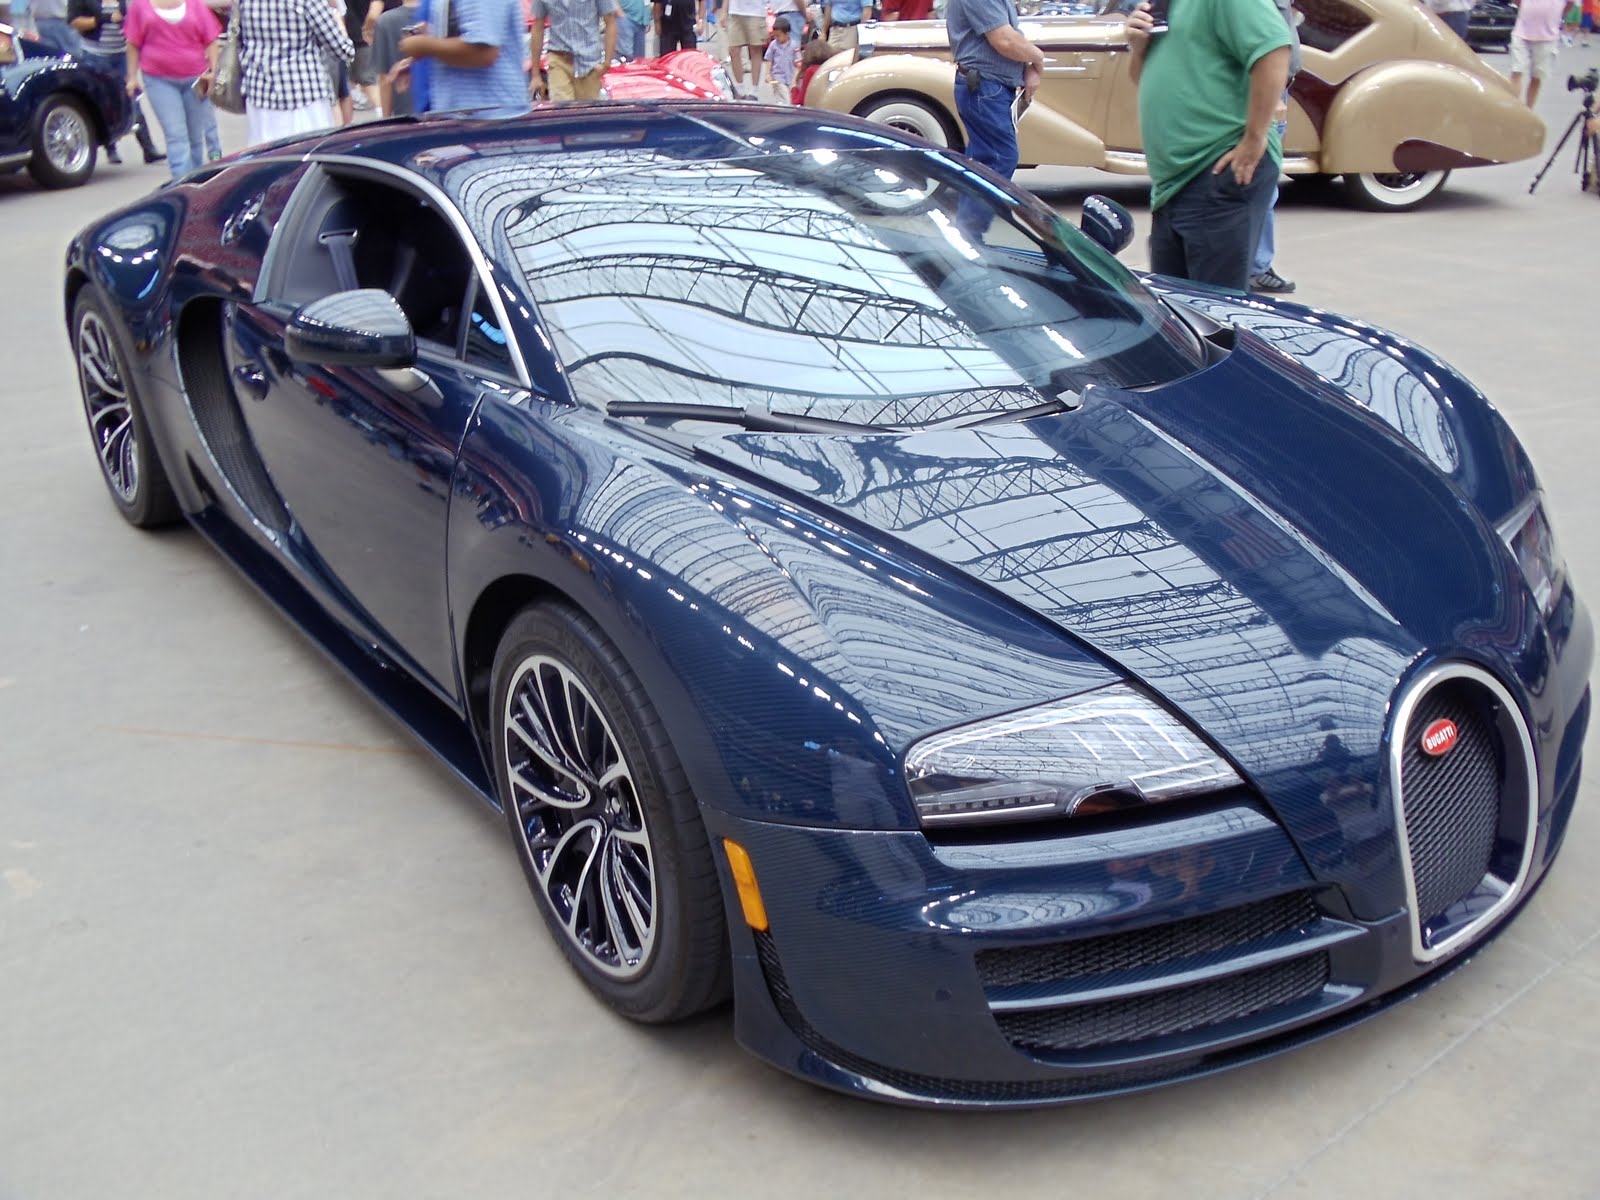  CarJunkie39;s Car Review: First Impression: Bugatti Veyron Super Sport